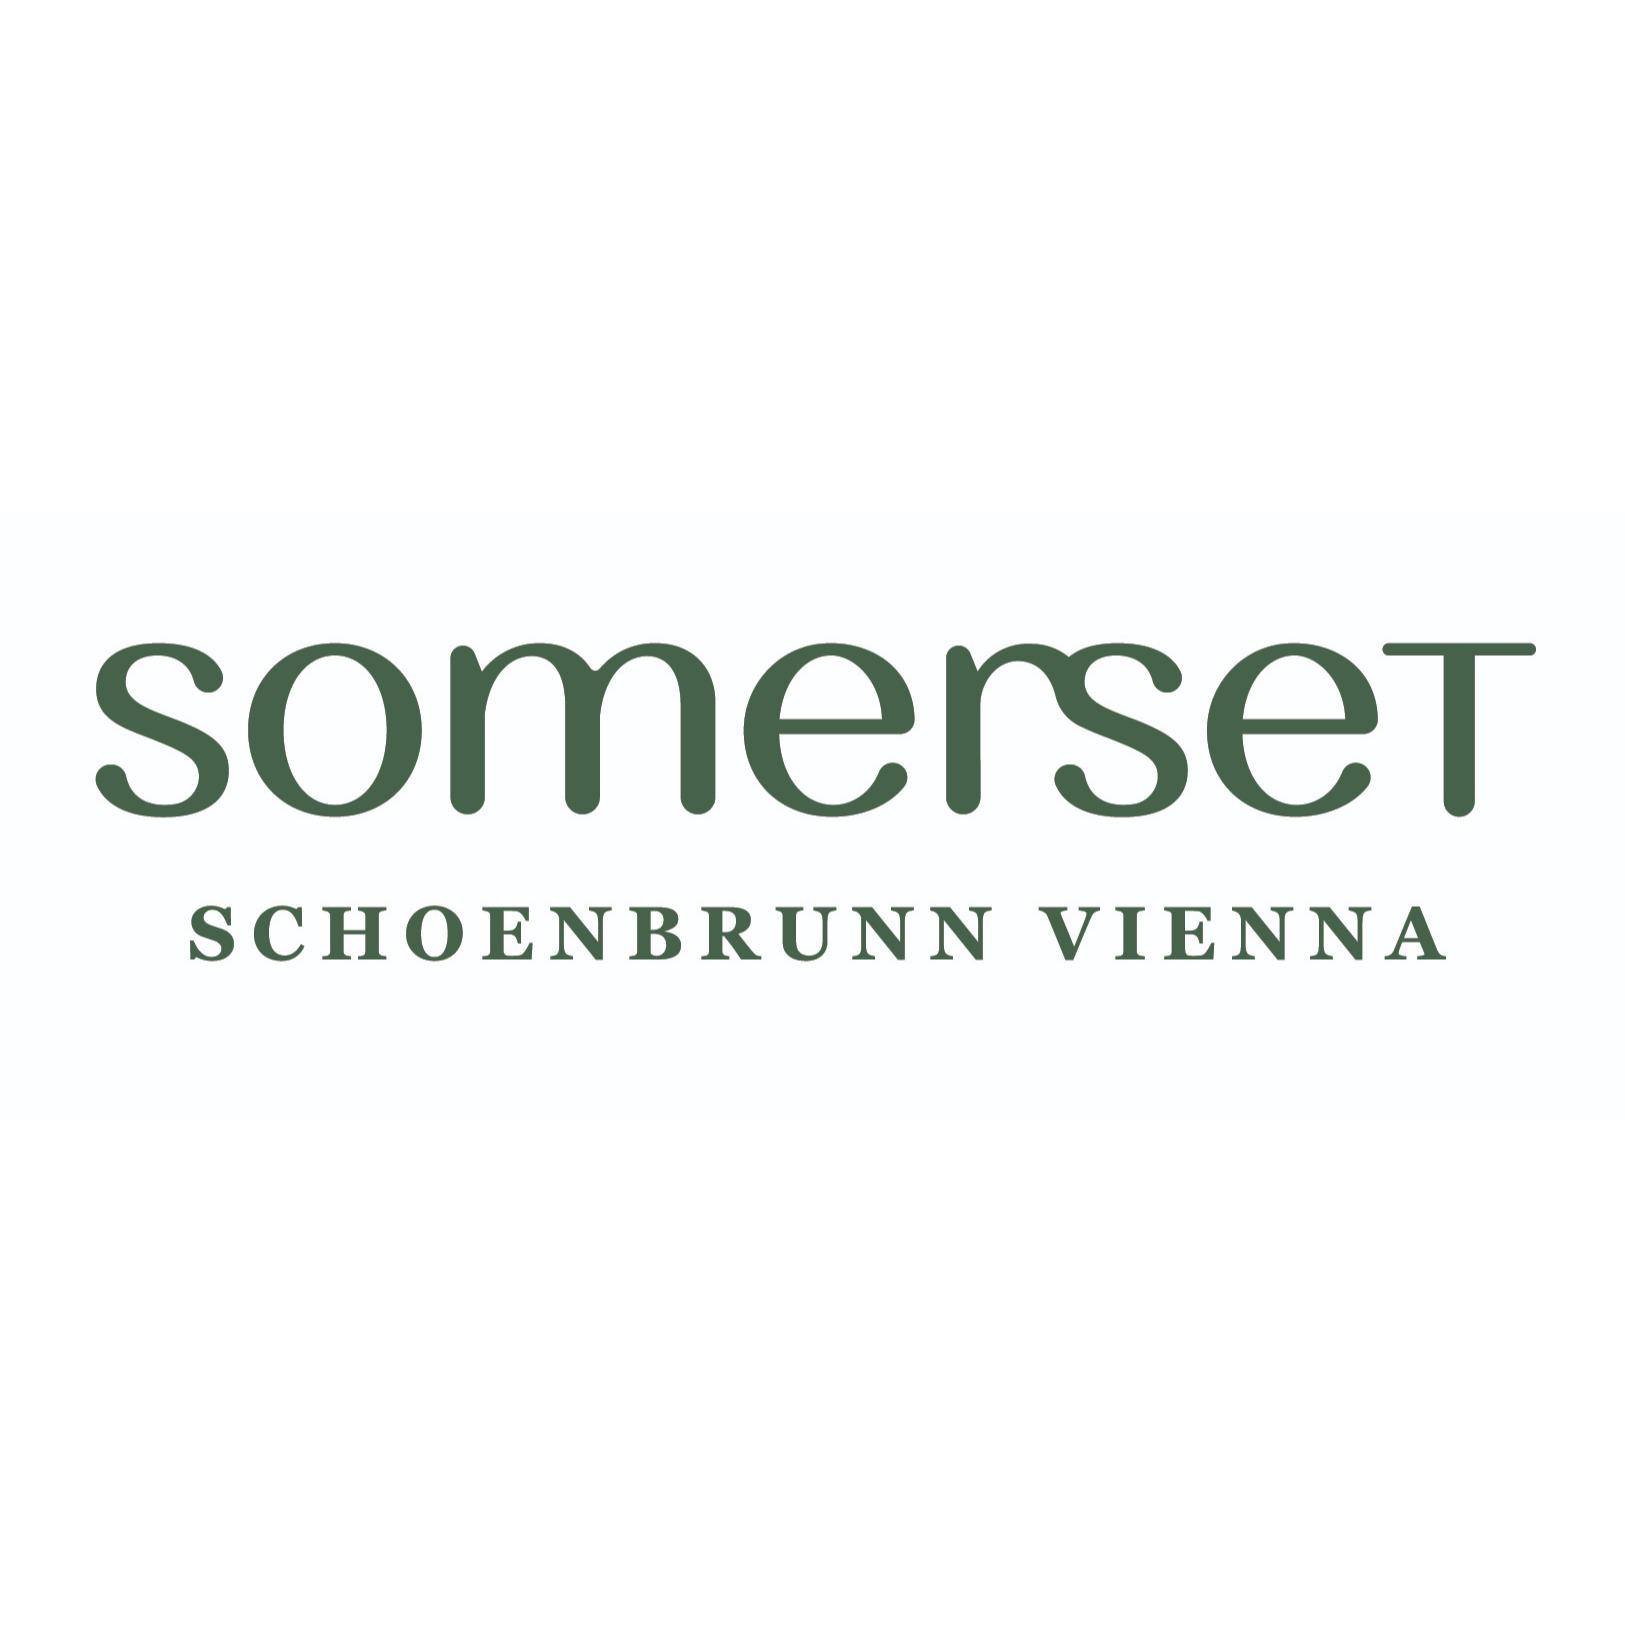 Somerset Schoenbrunn Vienna - Extended Stay Hotel - Wien - 01 9346488 Austria | ShowMeLocal.com